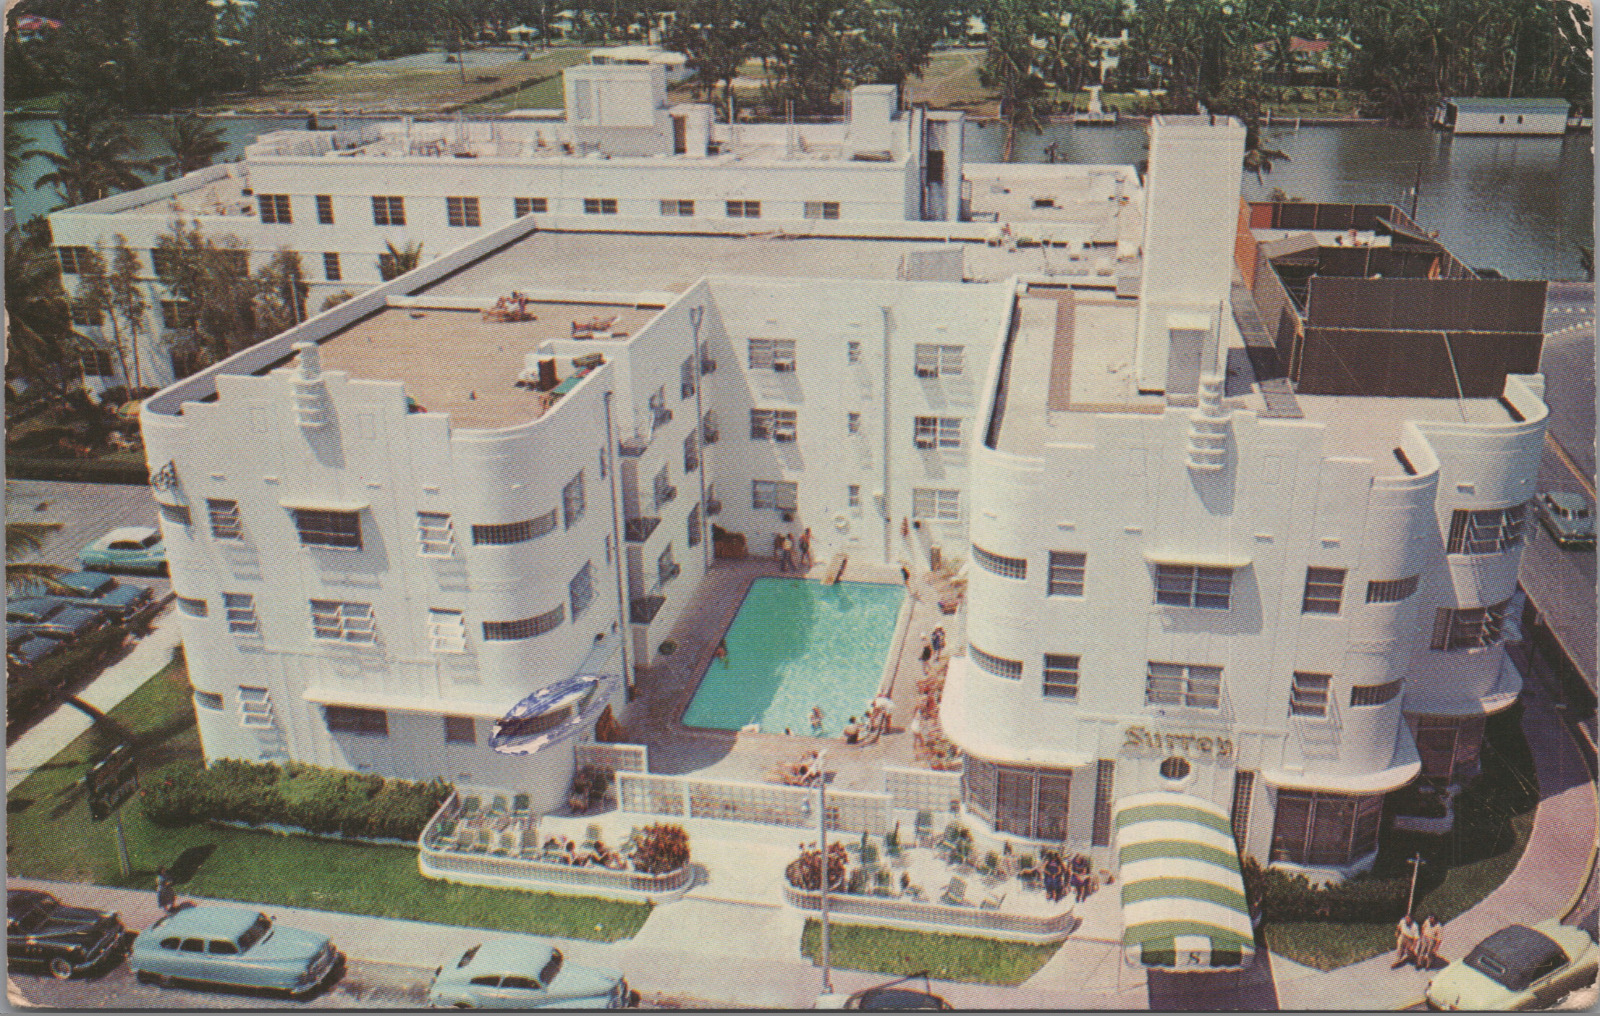 Surrey Hotel Miami Beach FL Art Deco 1954 Aerial View Promo Postcard - Posted